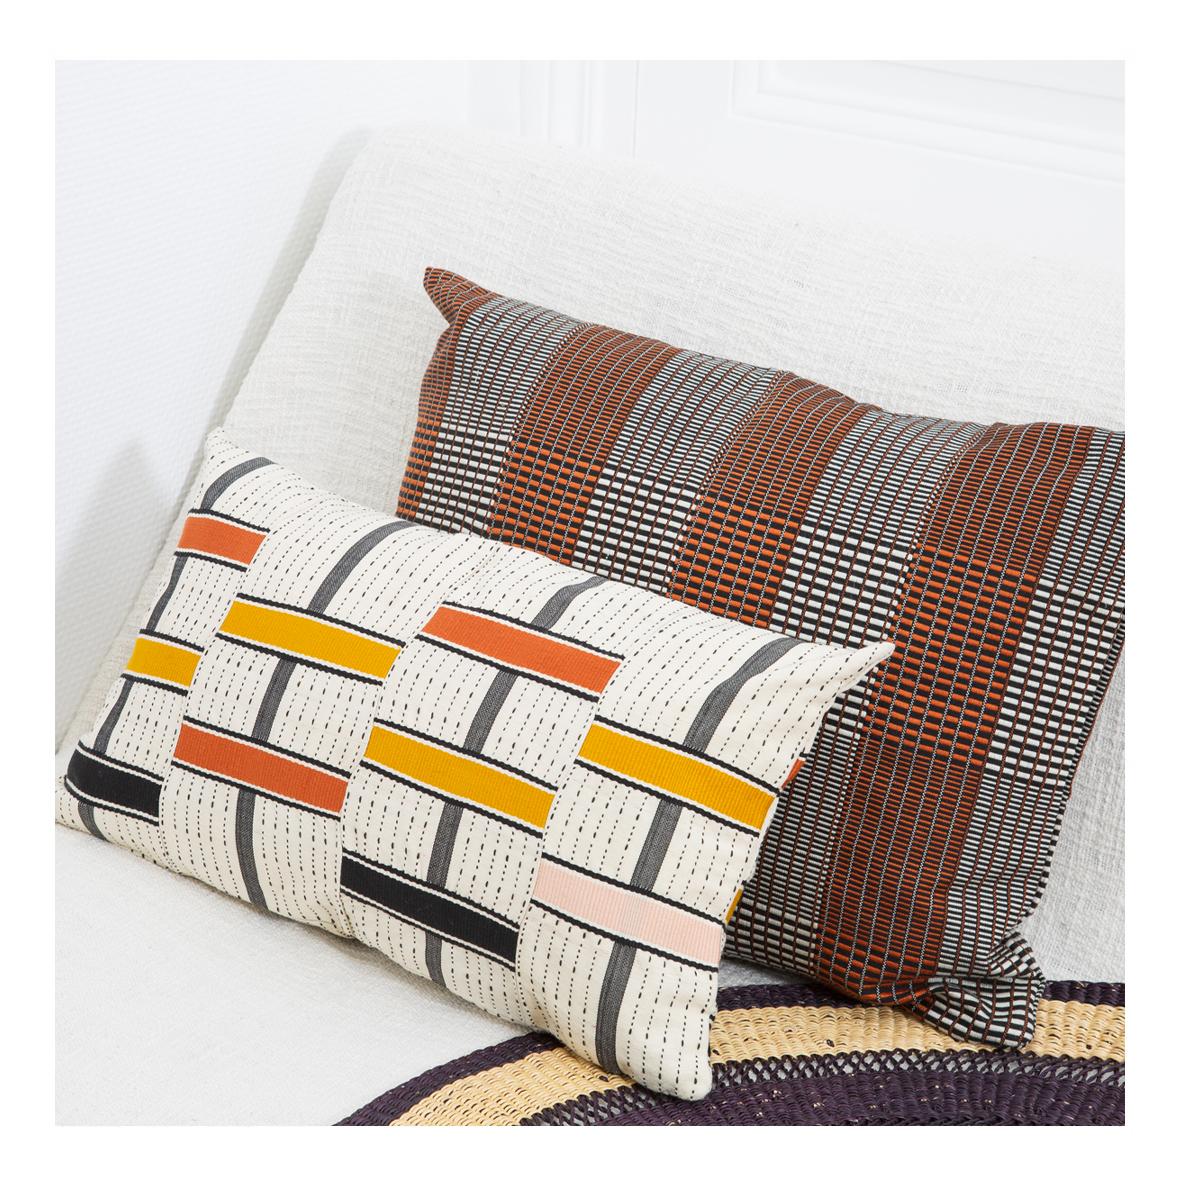 Bauhaus Contemporary Golden Editions Geometric Cushion Handwoven Cotton Kente Terracotta